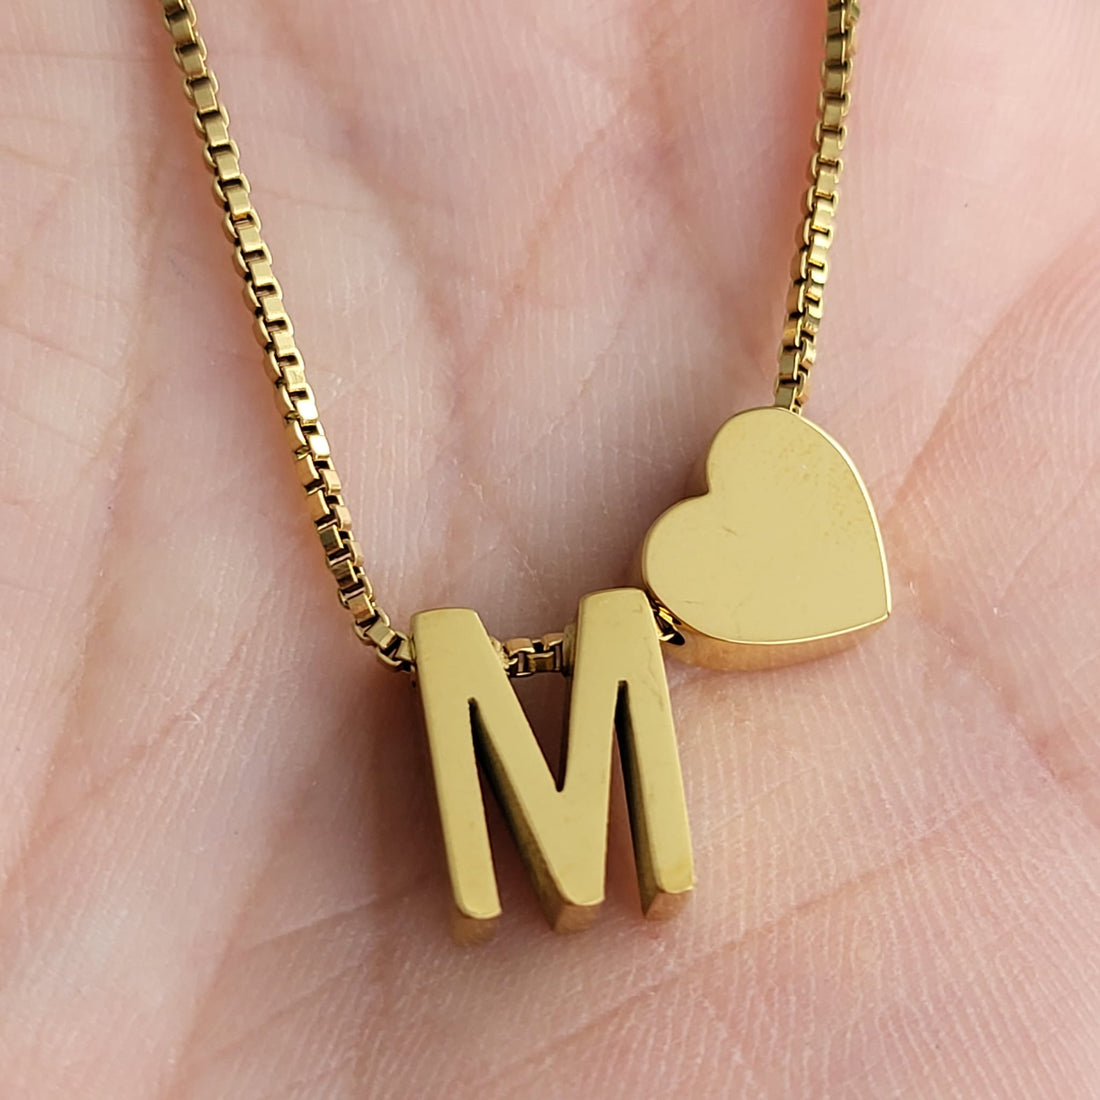 Necklace Initials Love - M